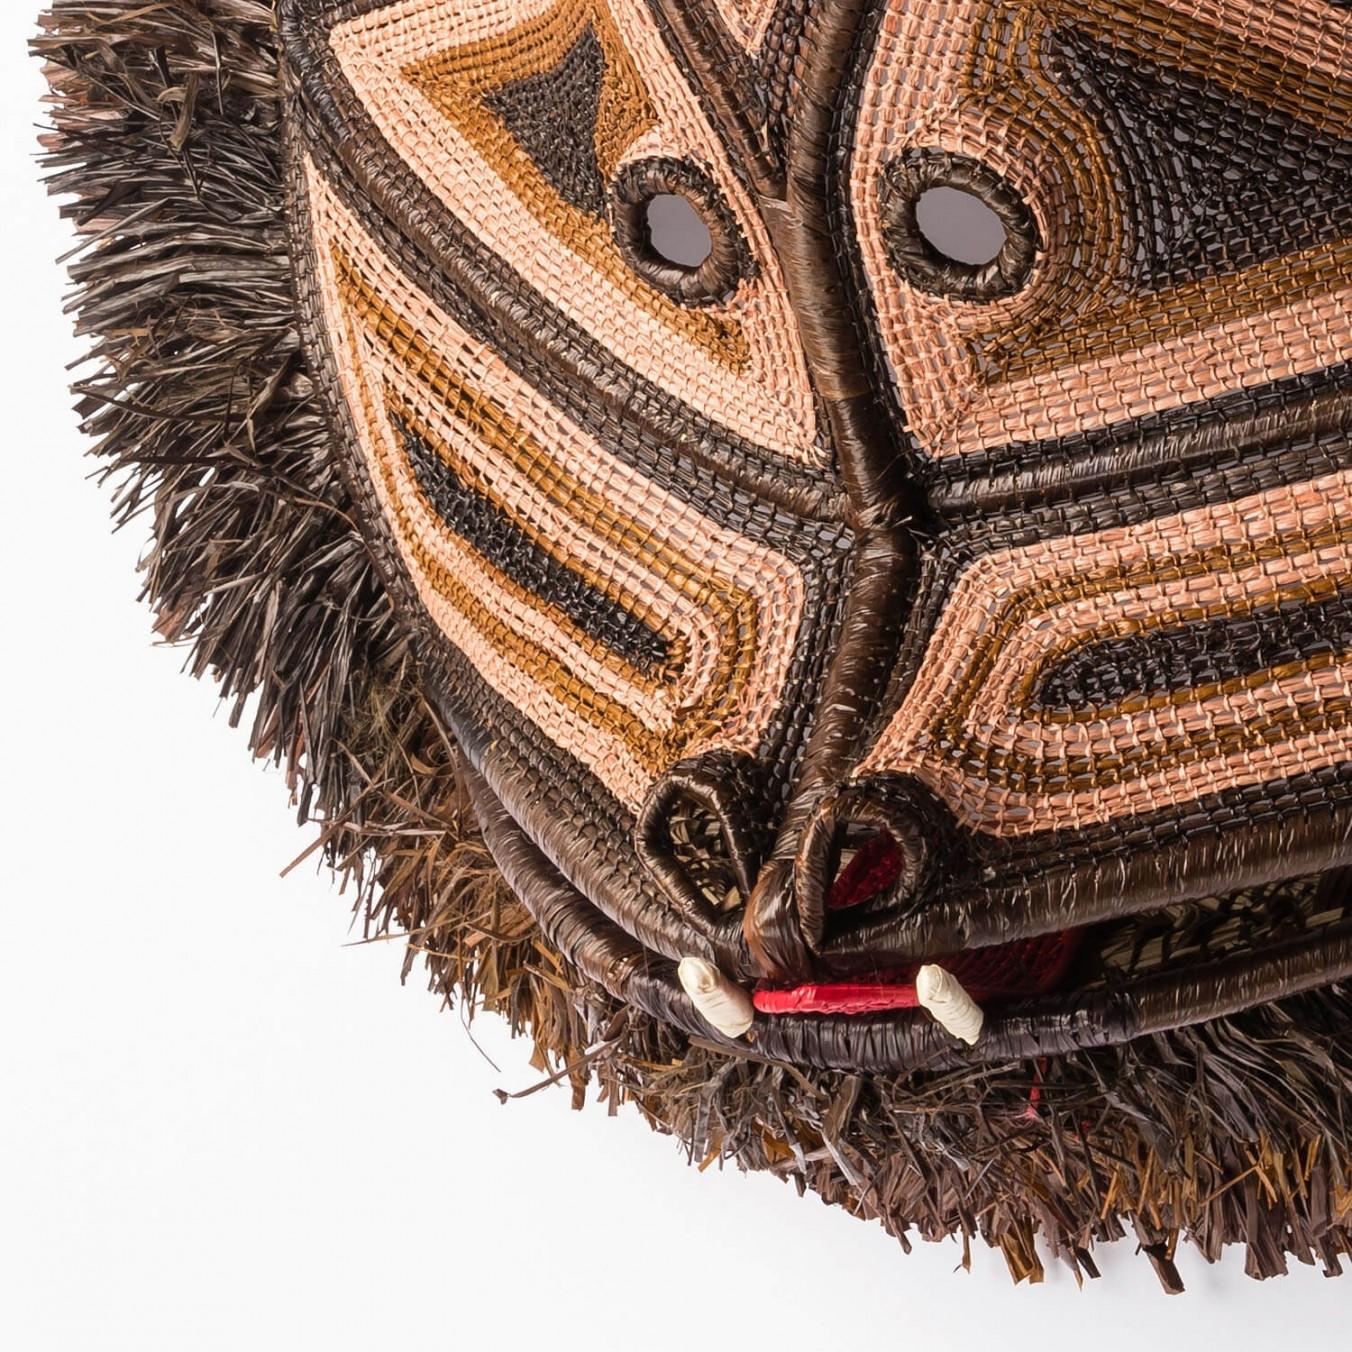 Primitive Decorative hand-woven mask from Panama, Nemboro Mono by Ethic&Tropic For Sale